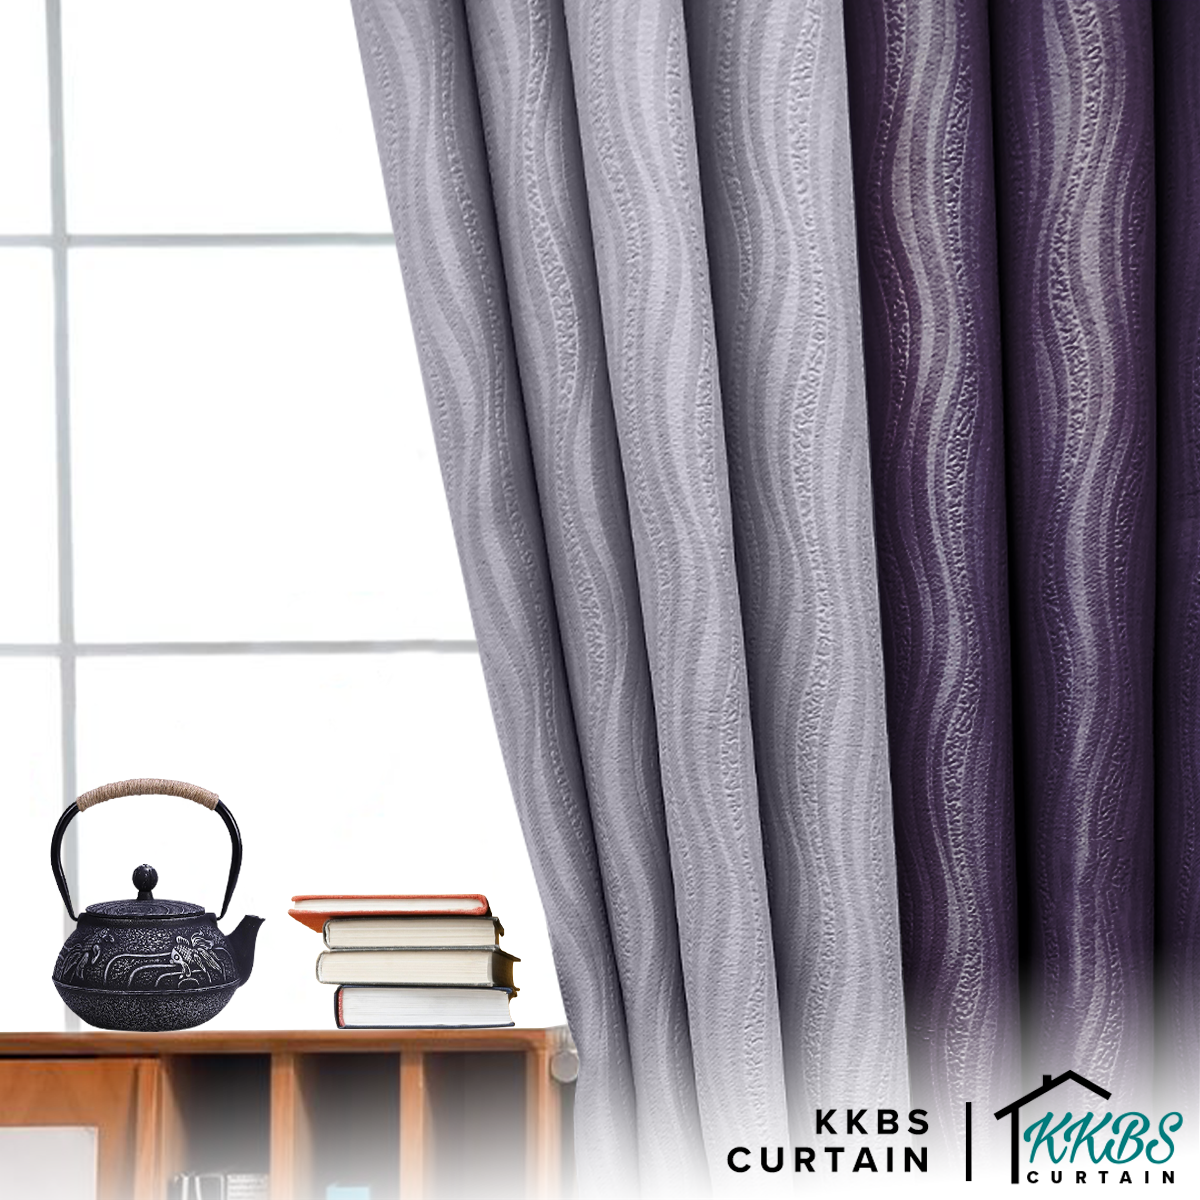 Diana Blackout Curtain Custom Made